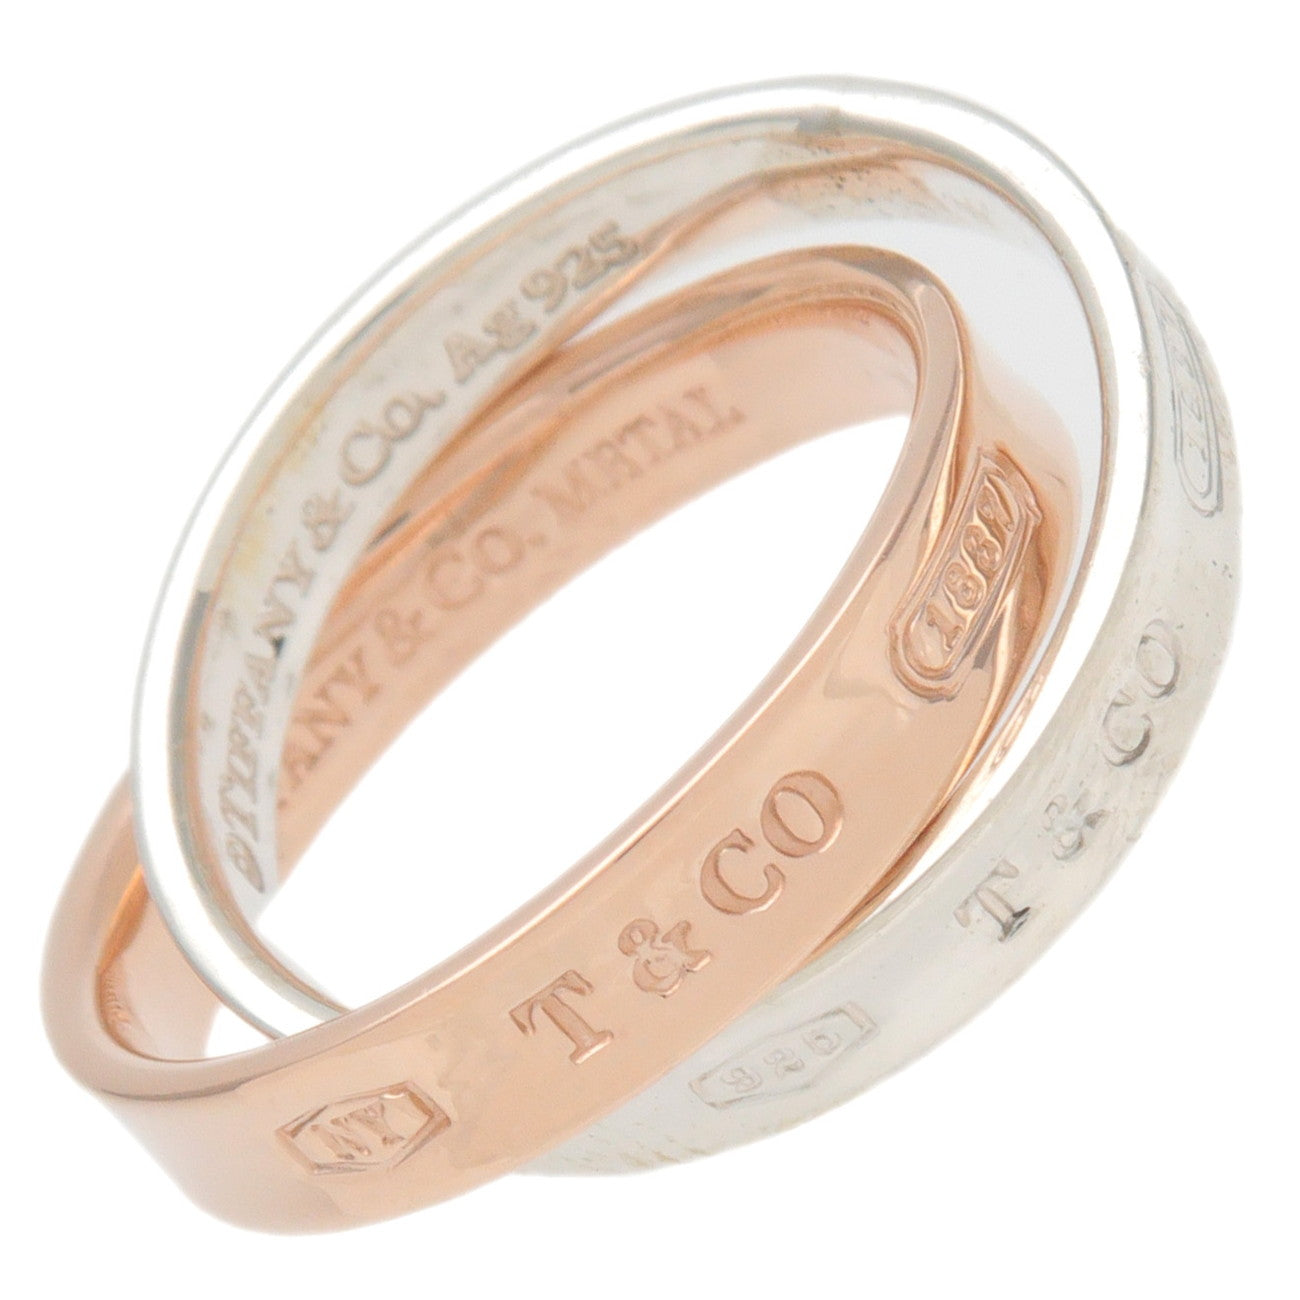 Tiffany&Co.-1837-Interlocking-Ring-SV925-Bronze-US4-EU47-HK8.5